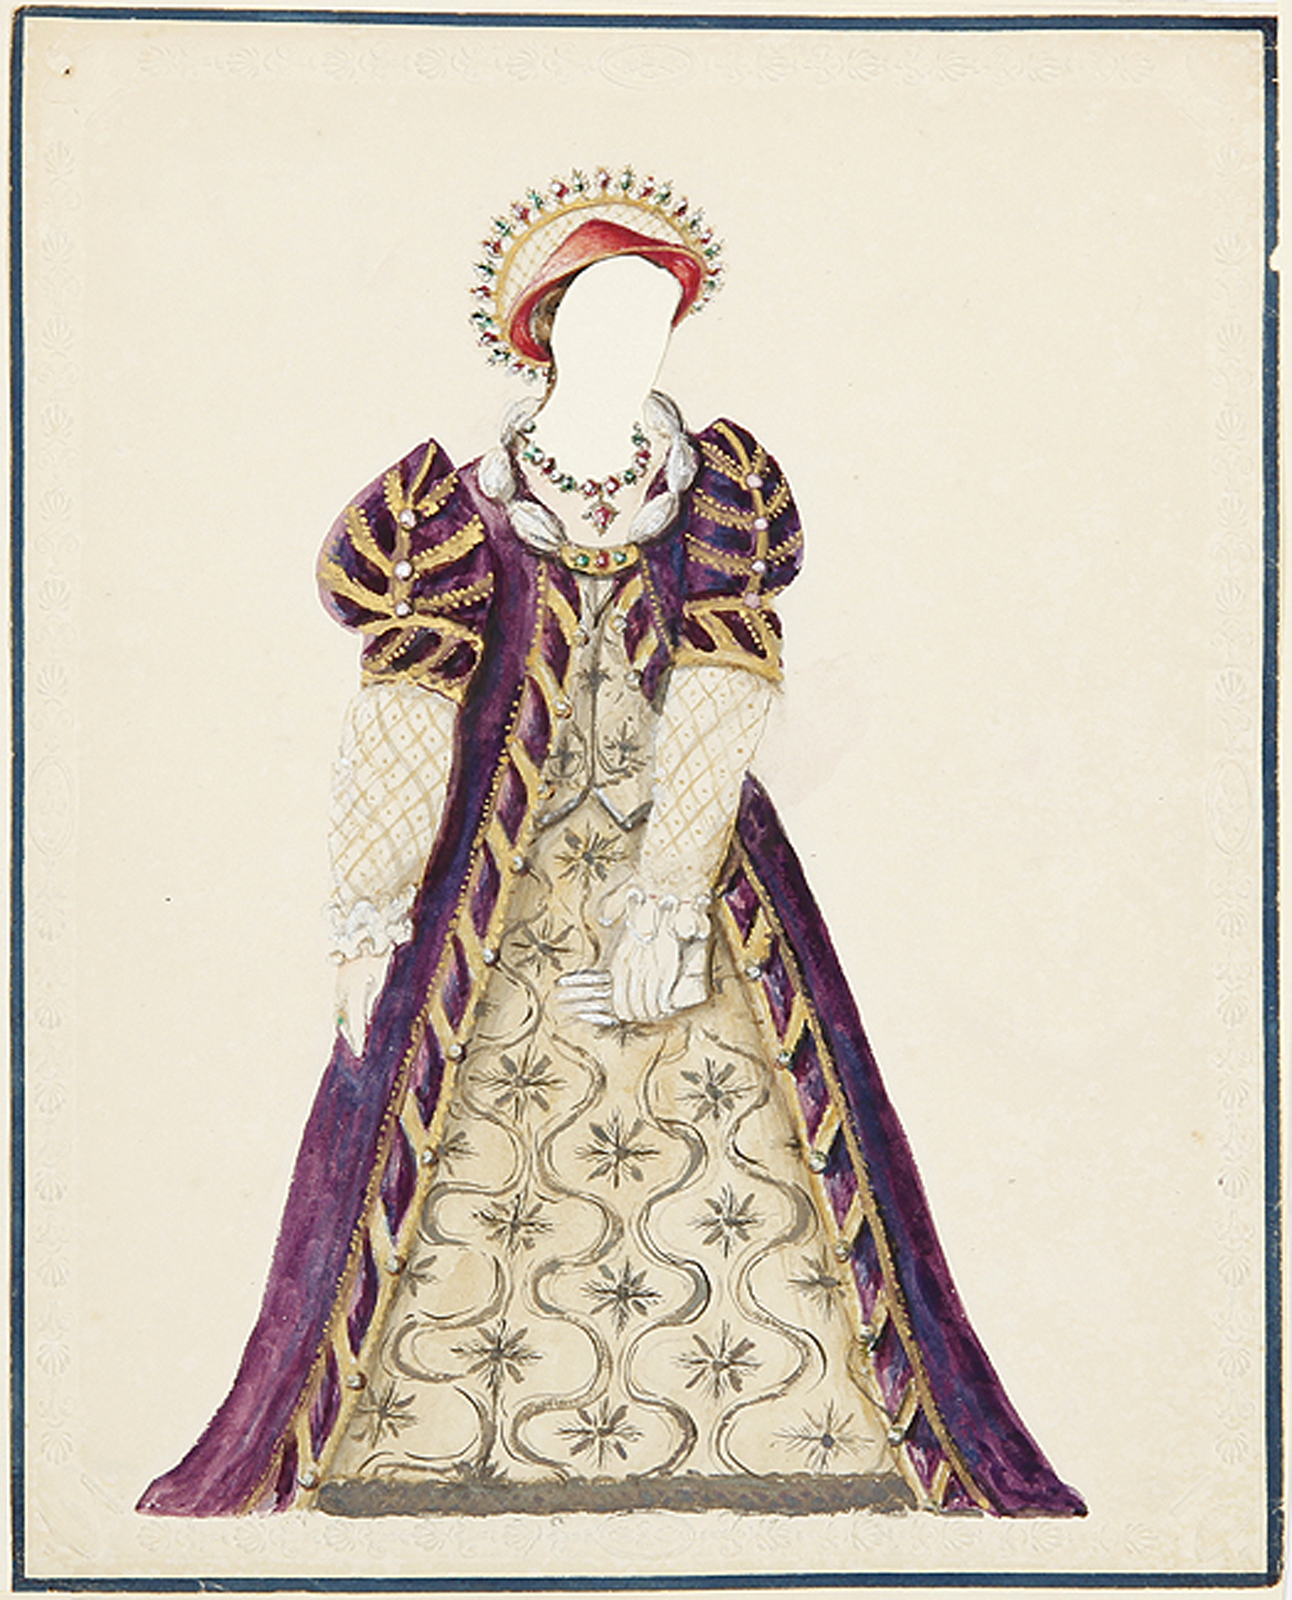 VARIA - MODE: Damenroben am Hofe Heinrich IV. von England und später.